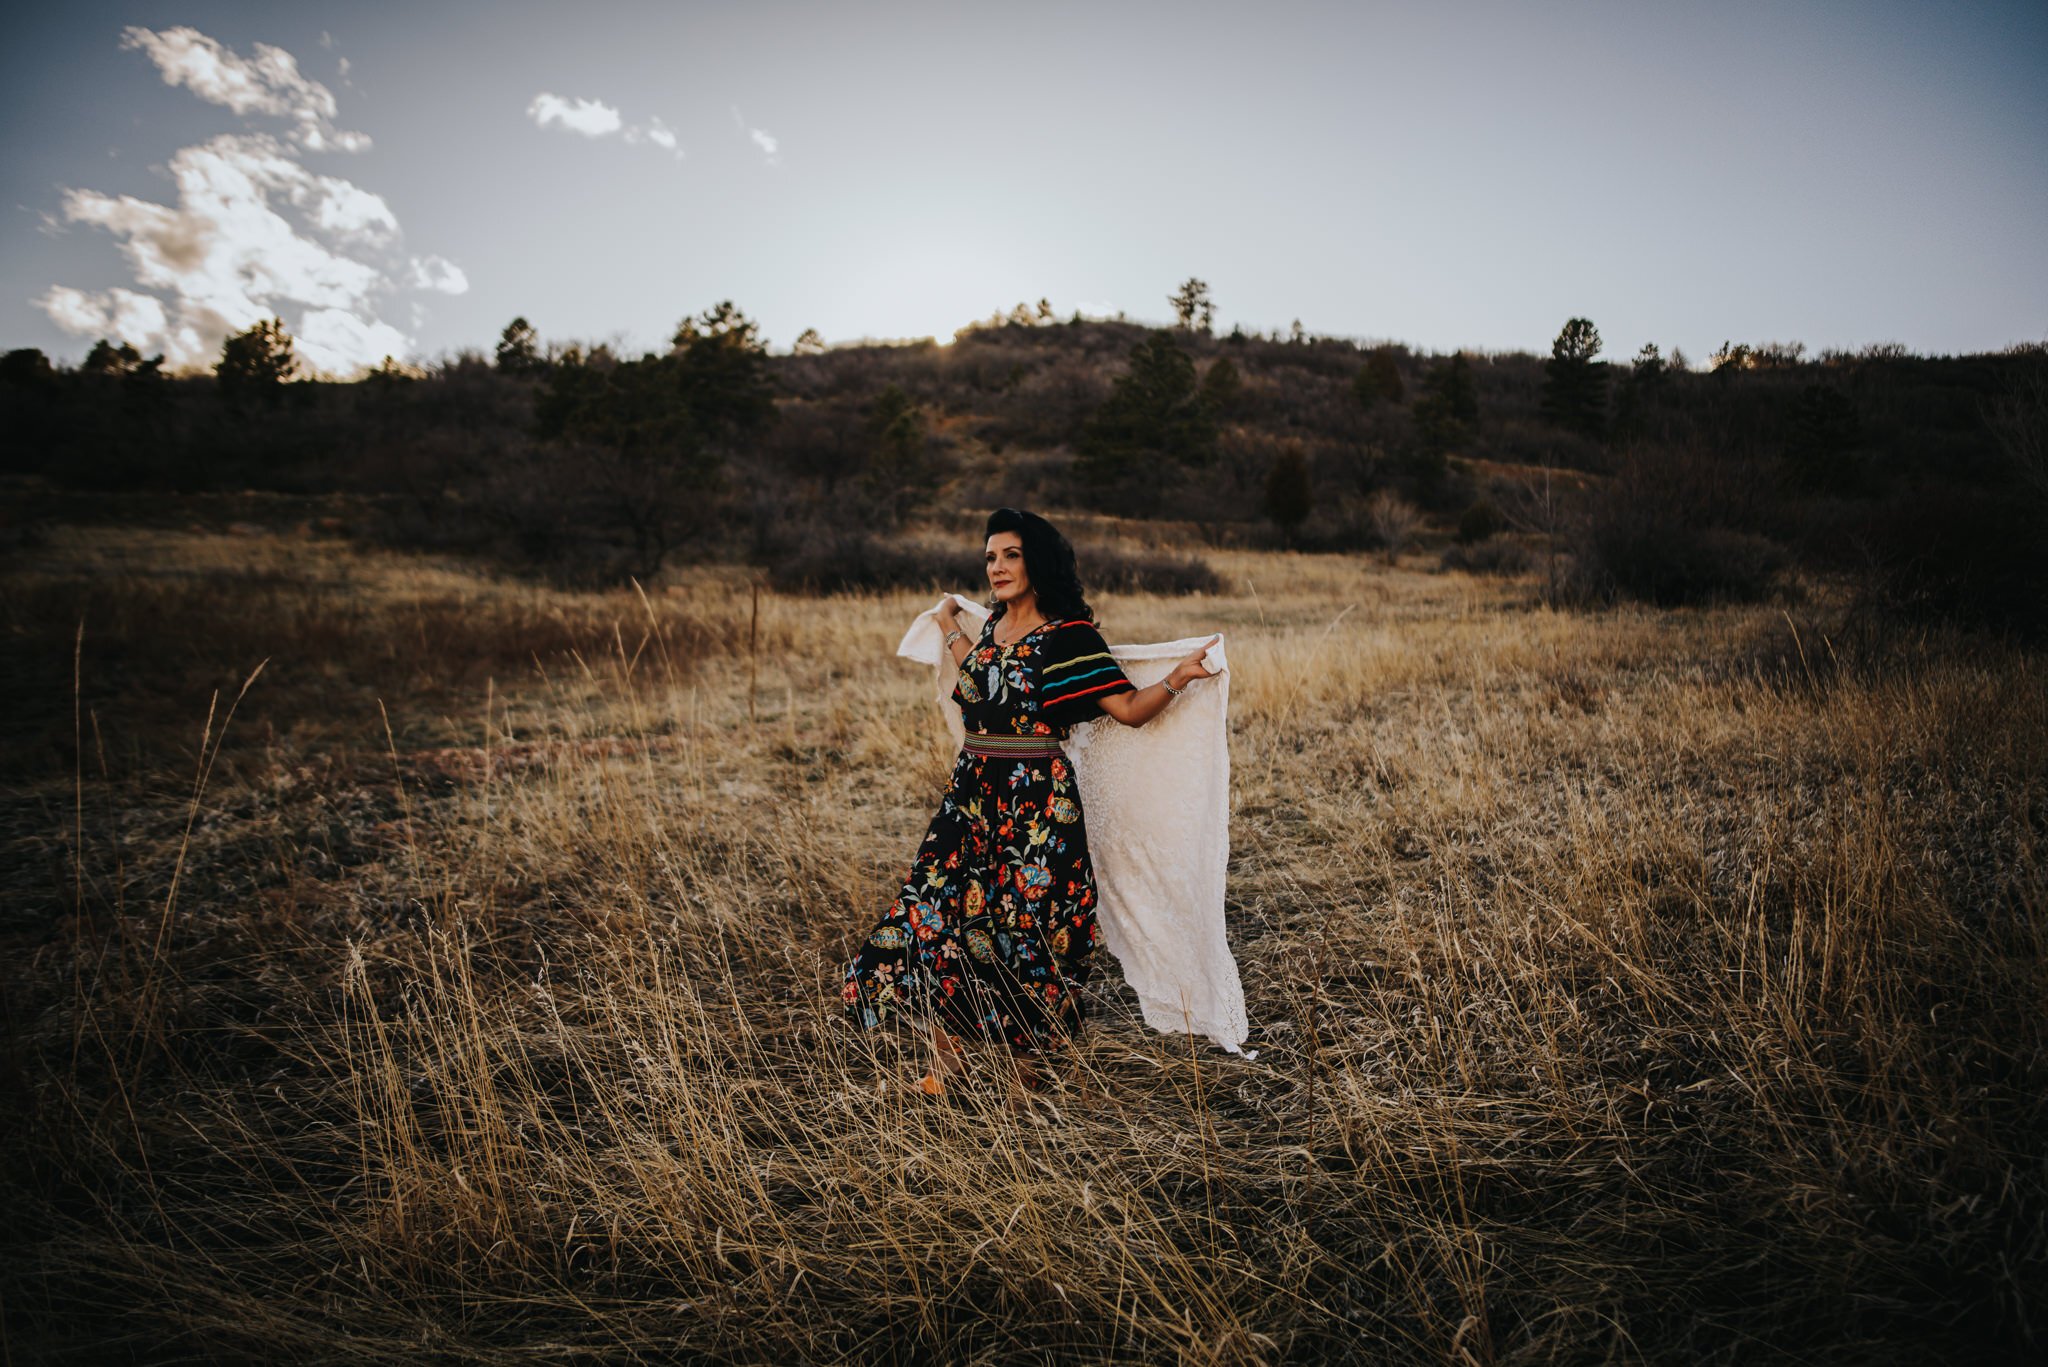 Celi+Turner+Headshots+Colorado+Springs+Colorado+Sunset+Mountains+Field+Woman+Wild+Prairie+Photography-02-2020.jpeg